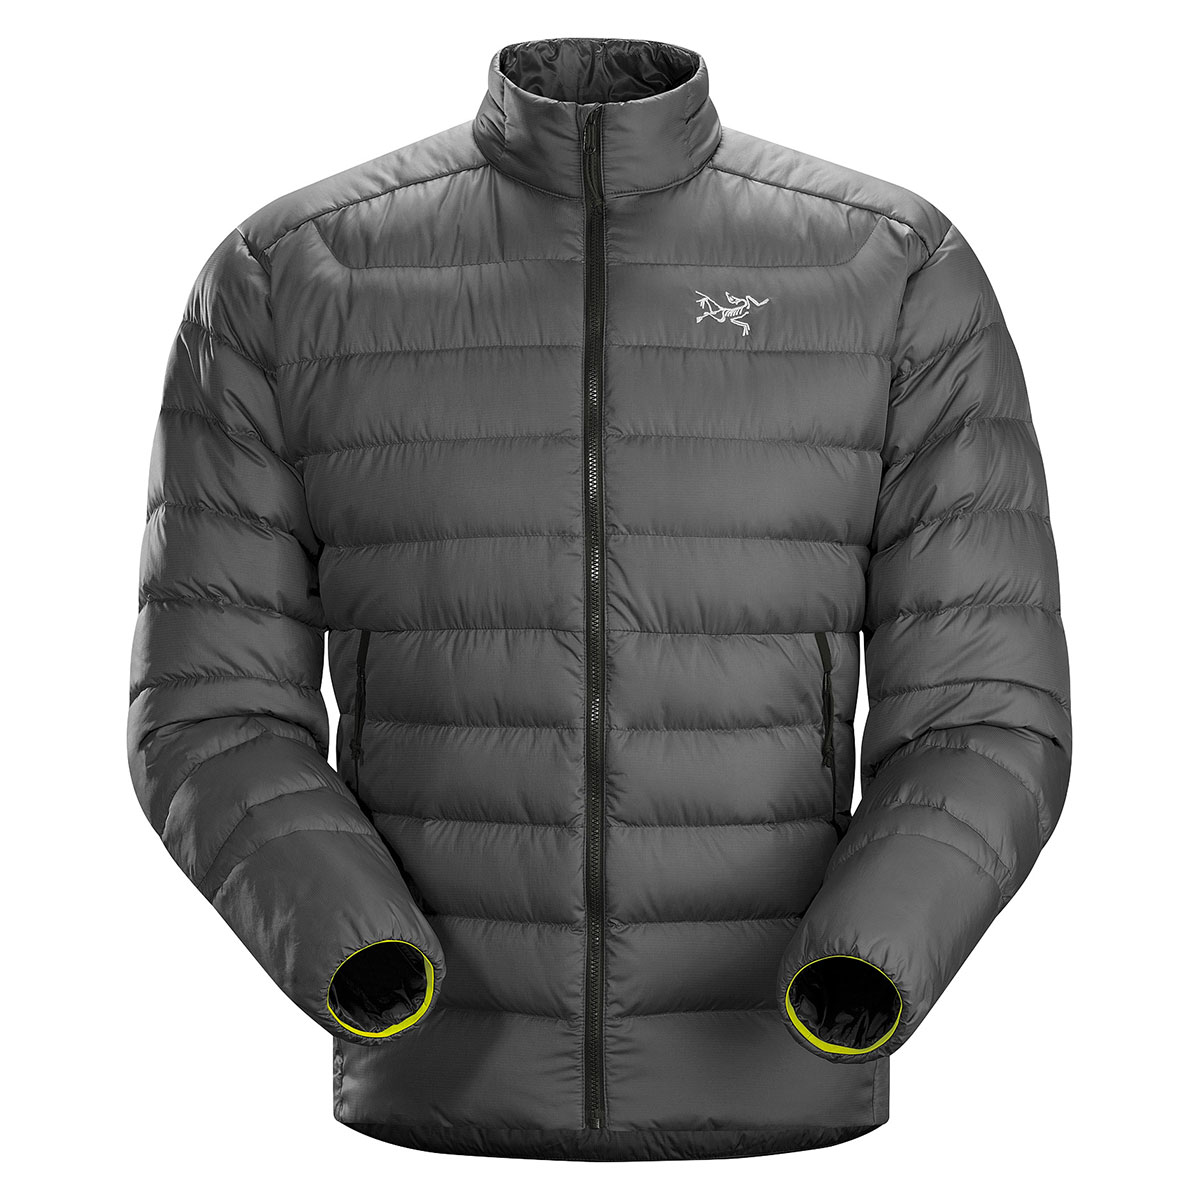 Arc'teryx Thorium AR Jacket, men's, discontinued model (free ground ...